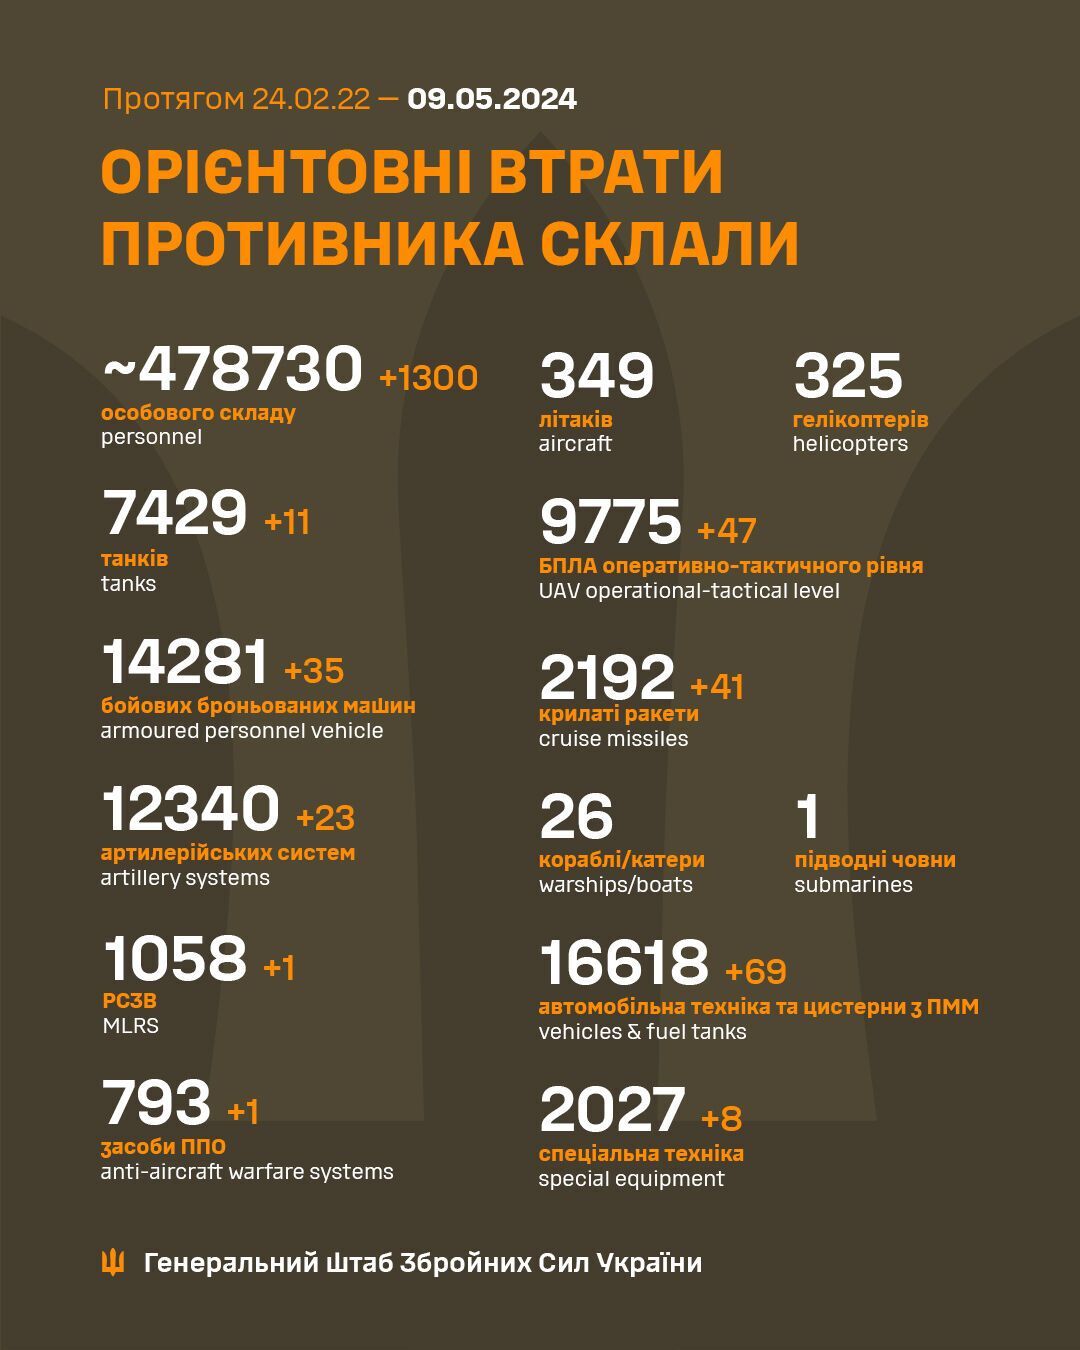 ВСУ обезвредили за сутки 1300 оккупантов и 35 российских ББМ – Генштаб